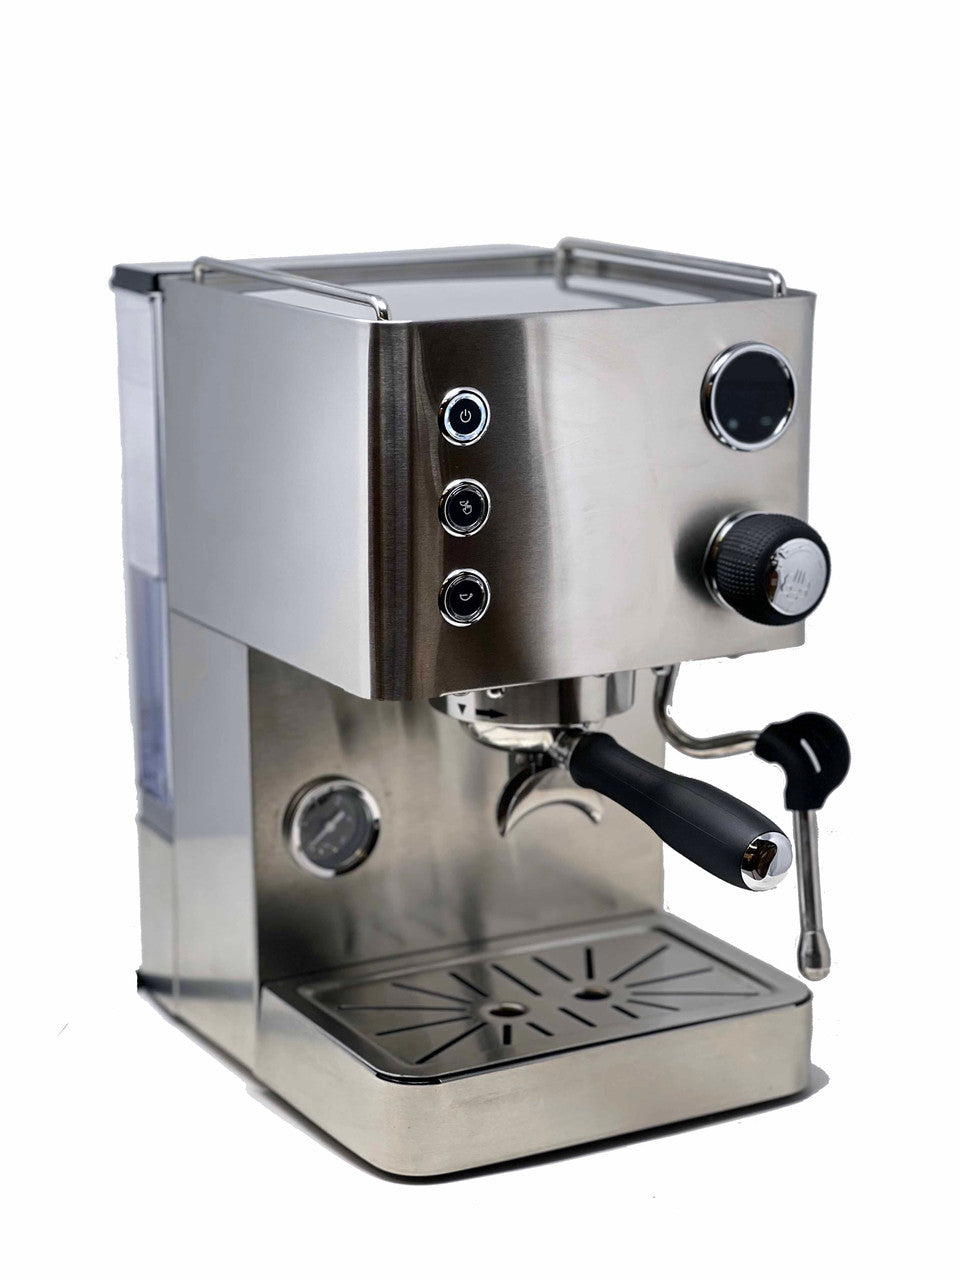 Presse-Café Professionnel LUX - Espresso Mali Café et Machine à Espresso